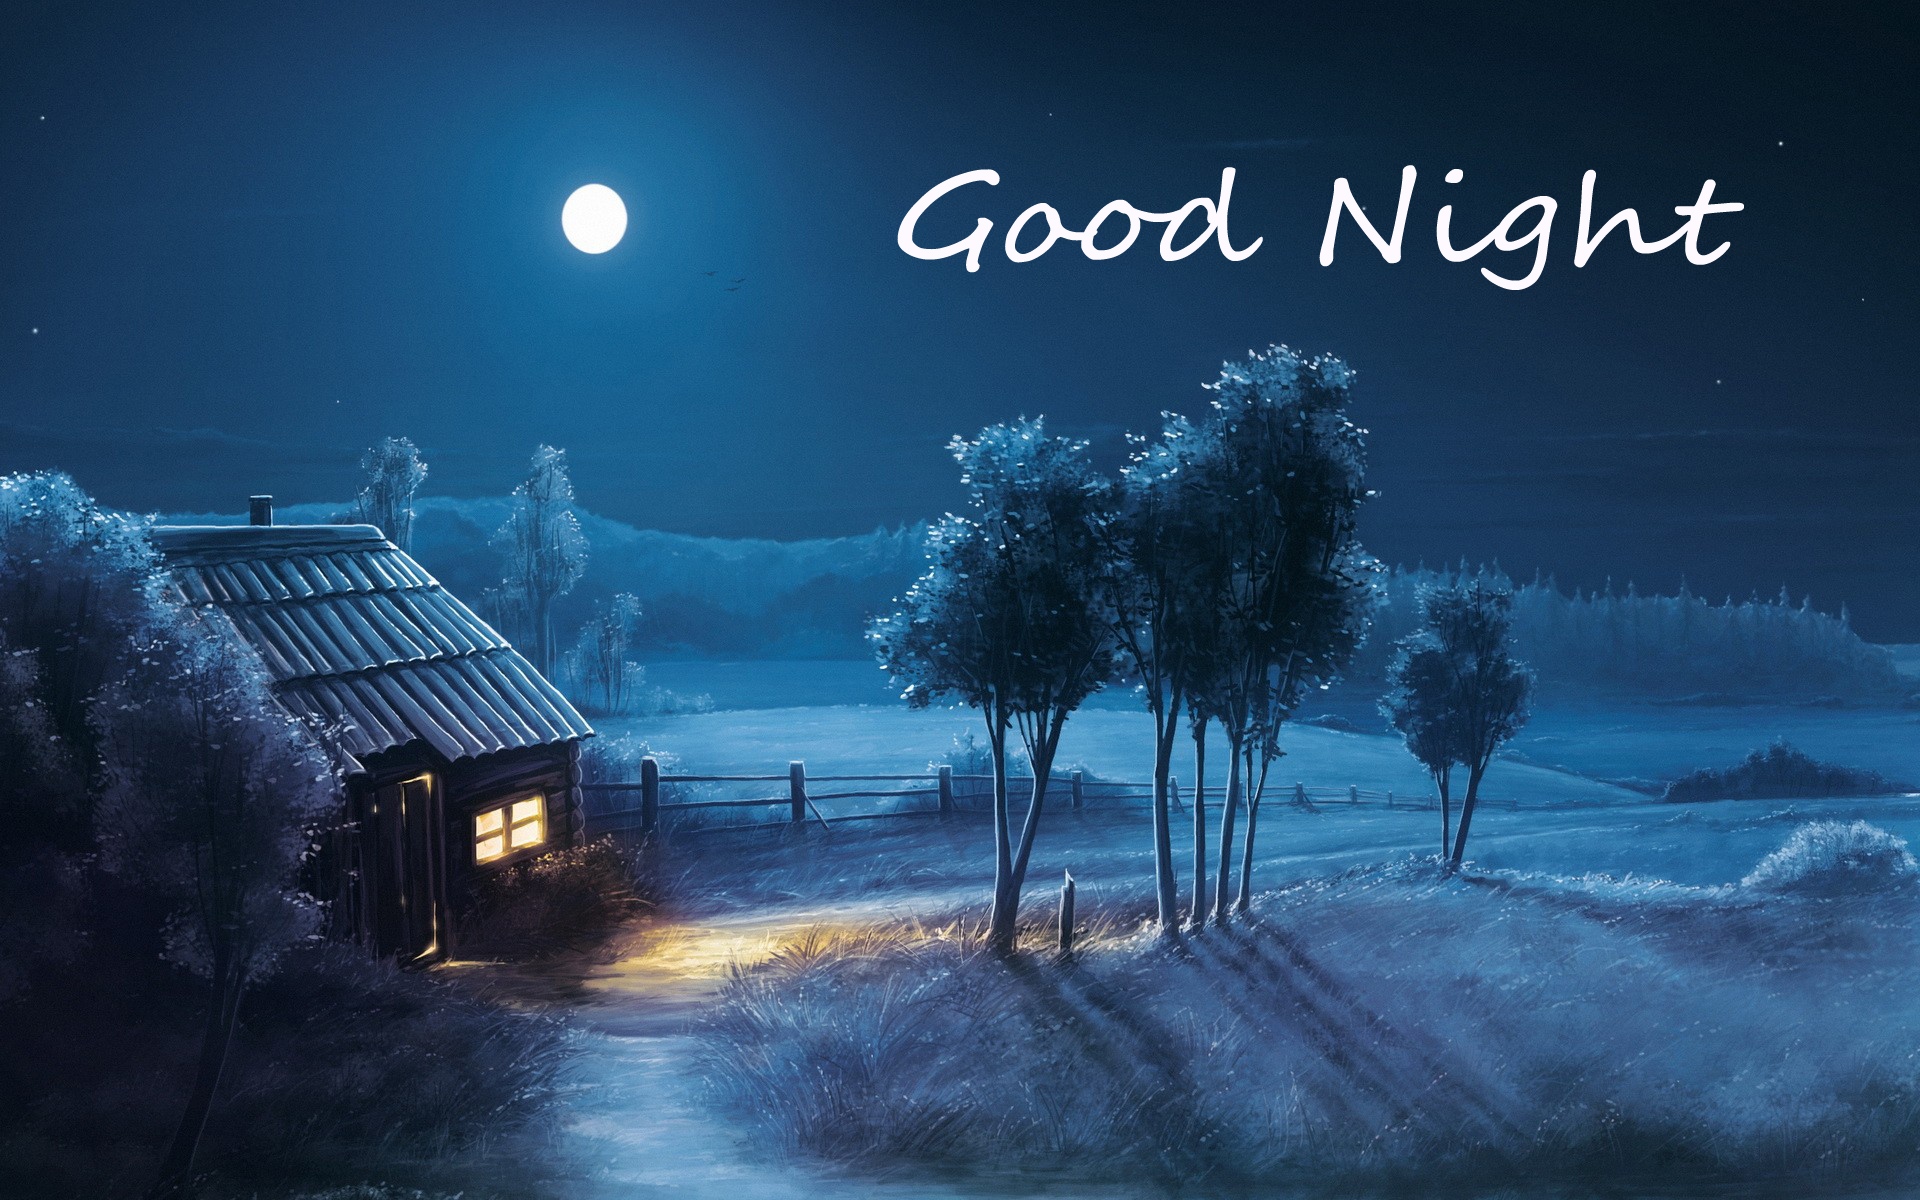 Good Night - Night - Village